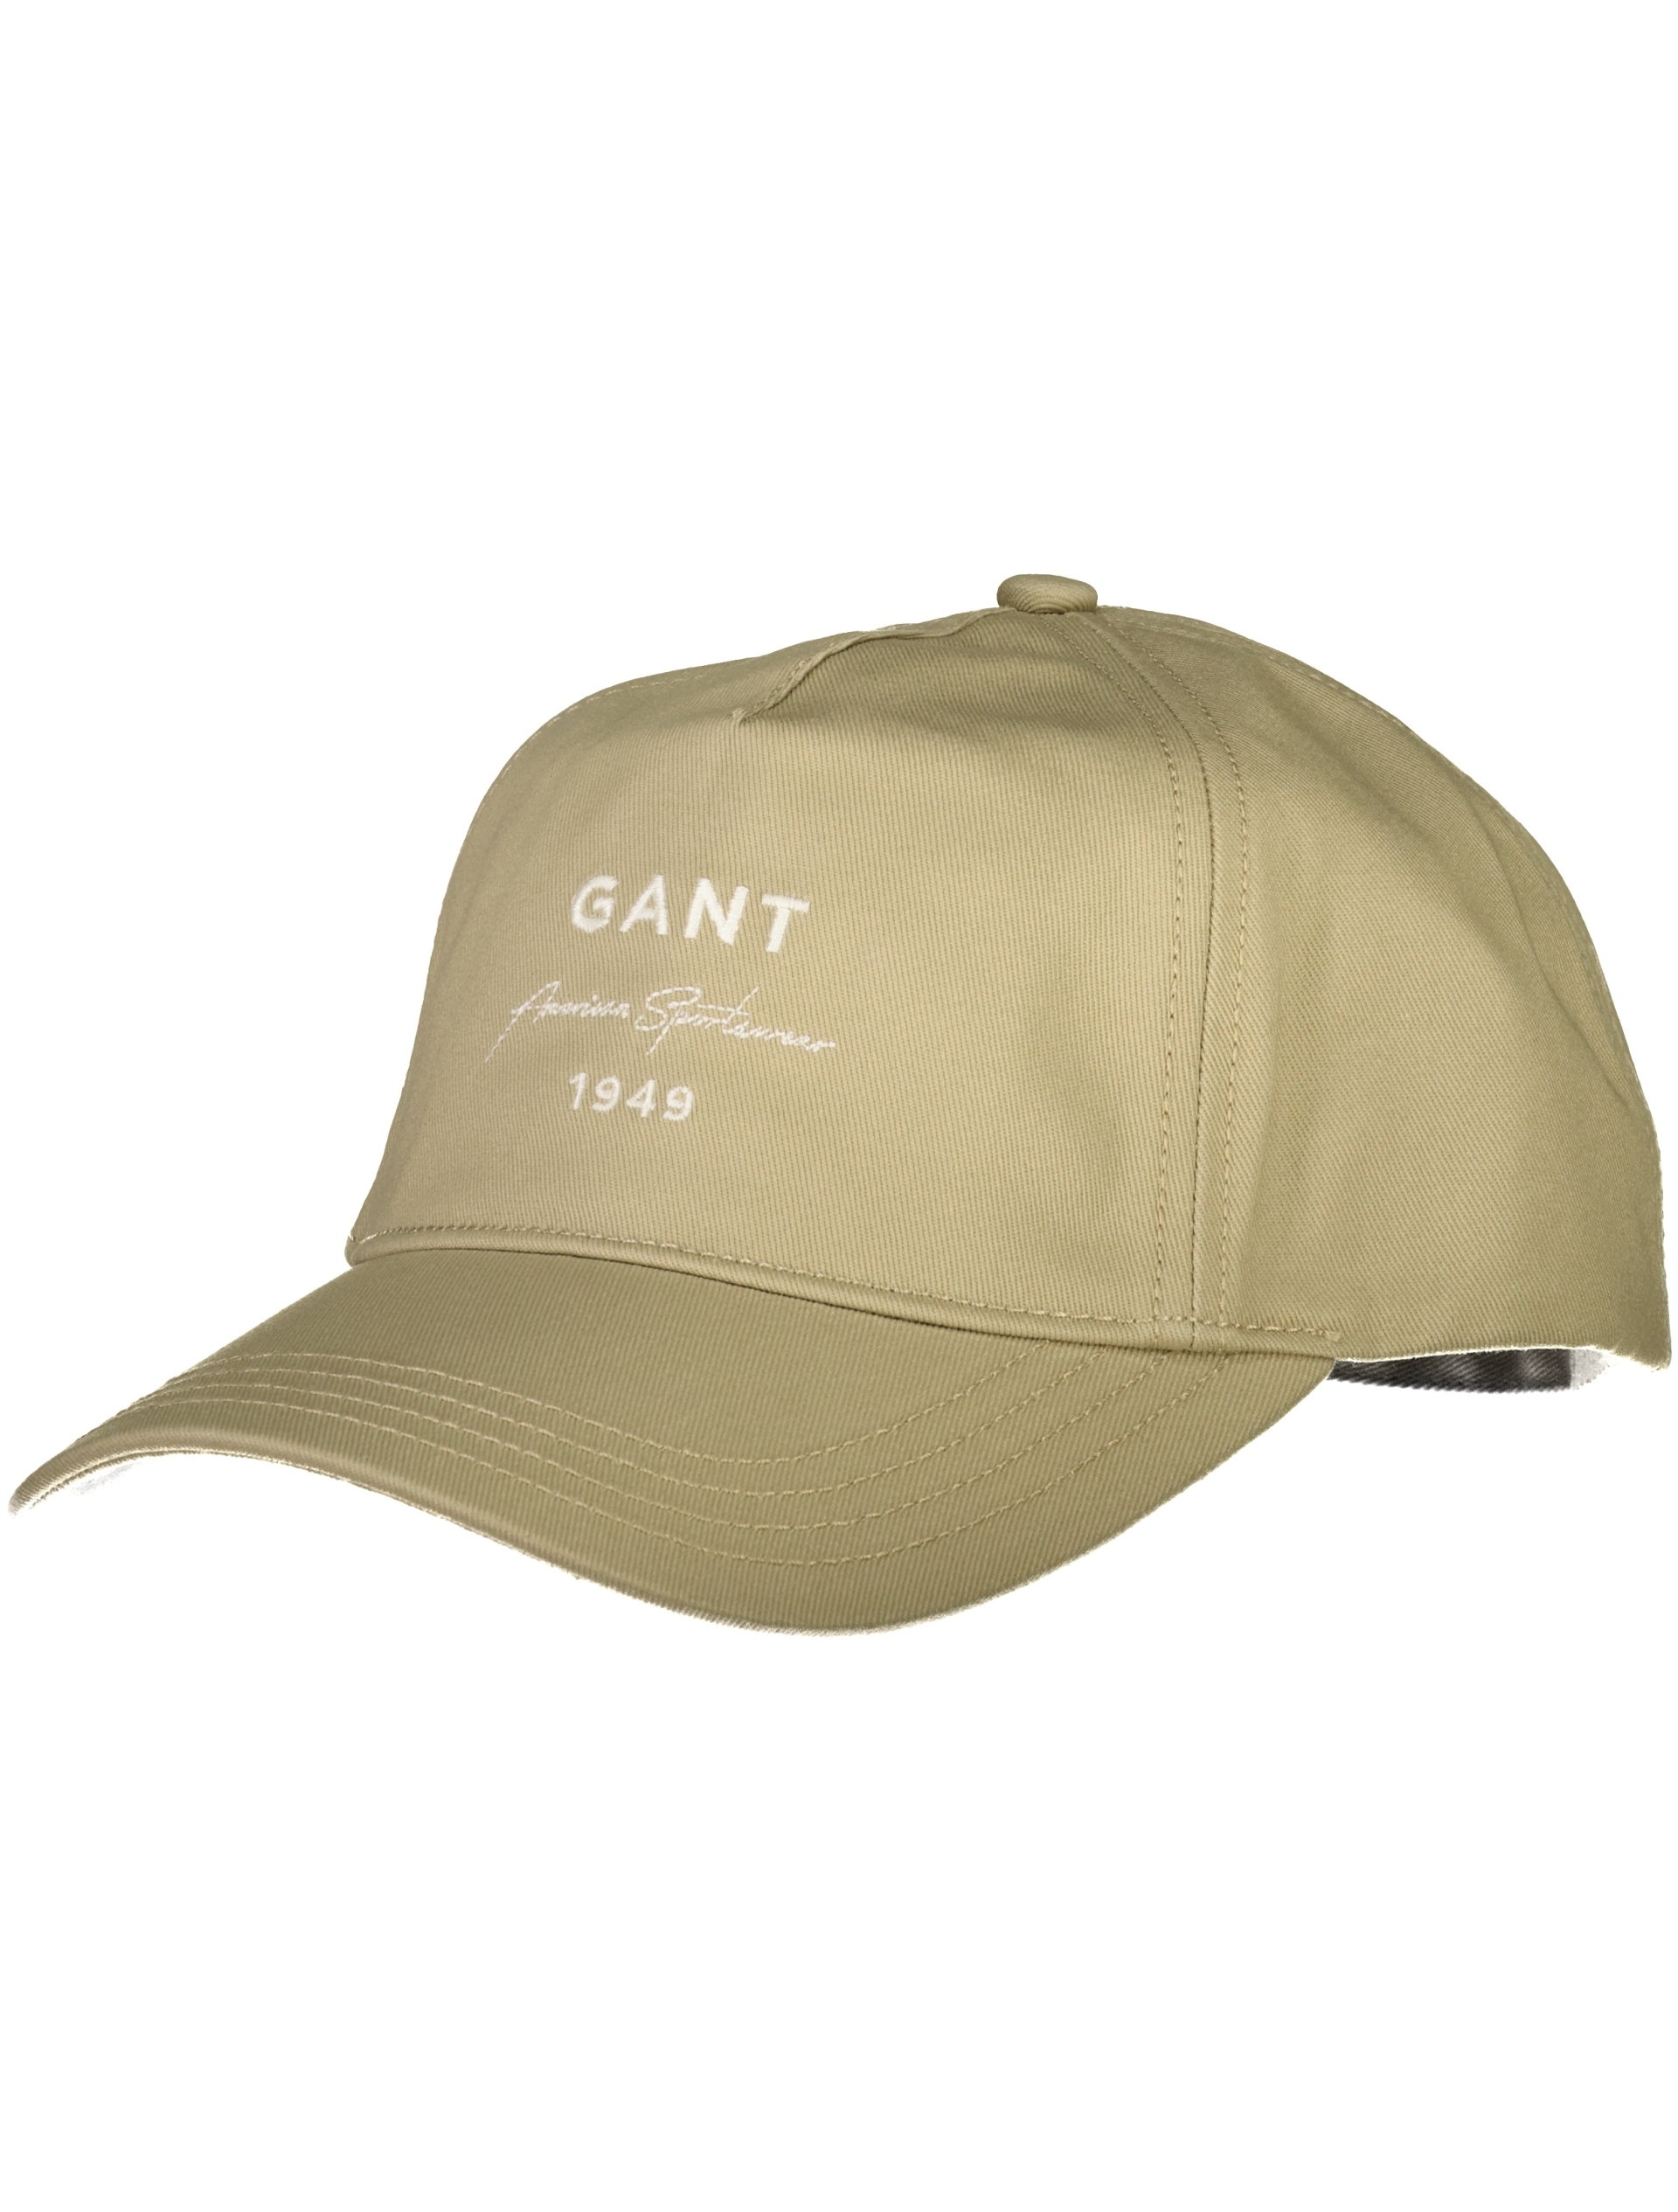 Gant Kasket sand / 253 dry khaki